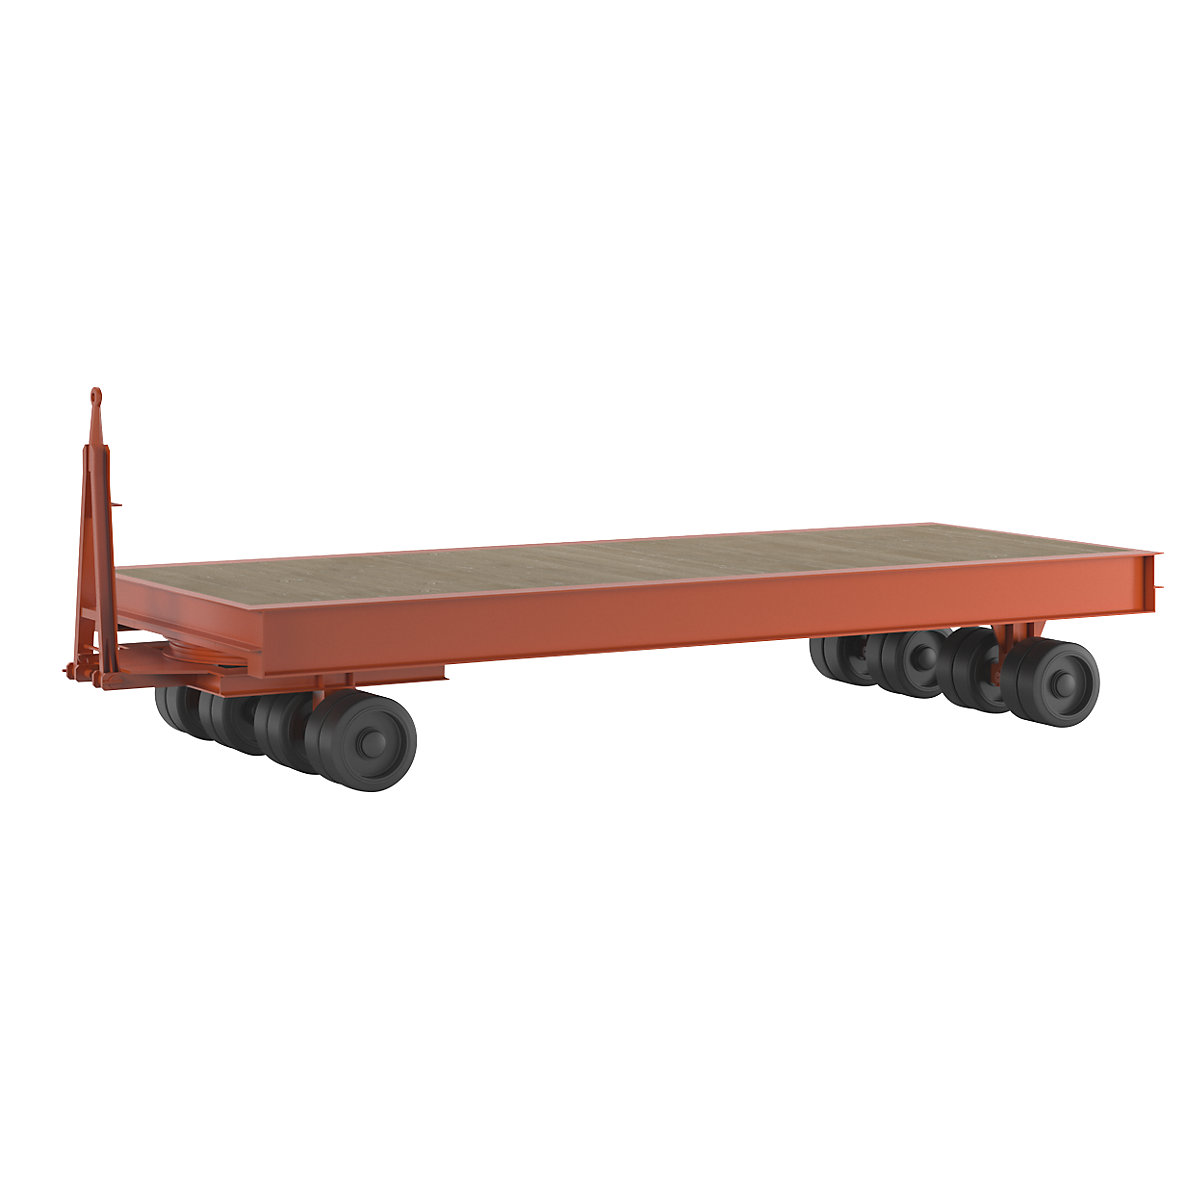 Heavy goods trailer, 32 t, turntable steering, platform 5.0 x 2.0 m-1